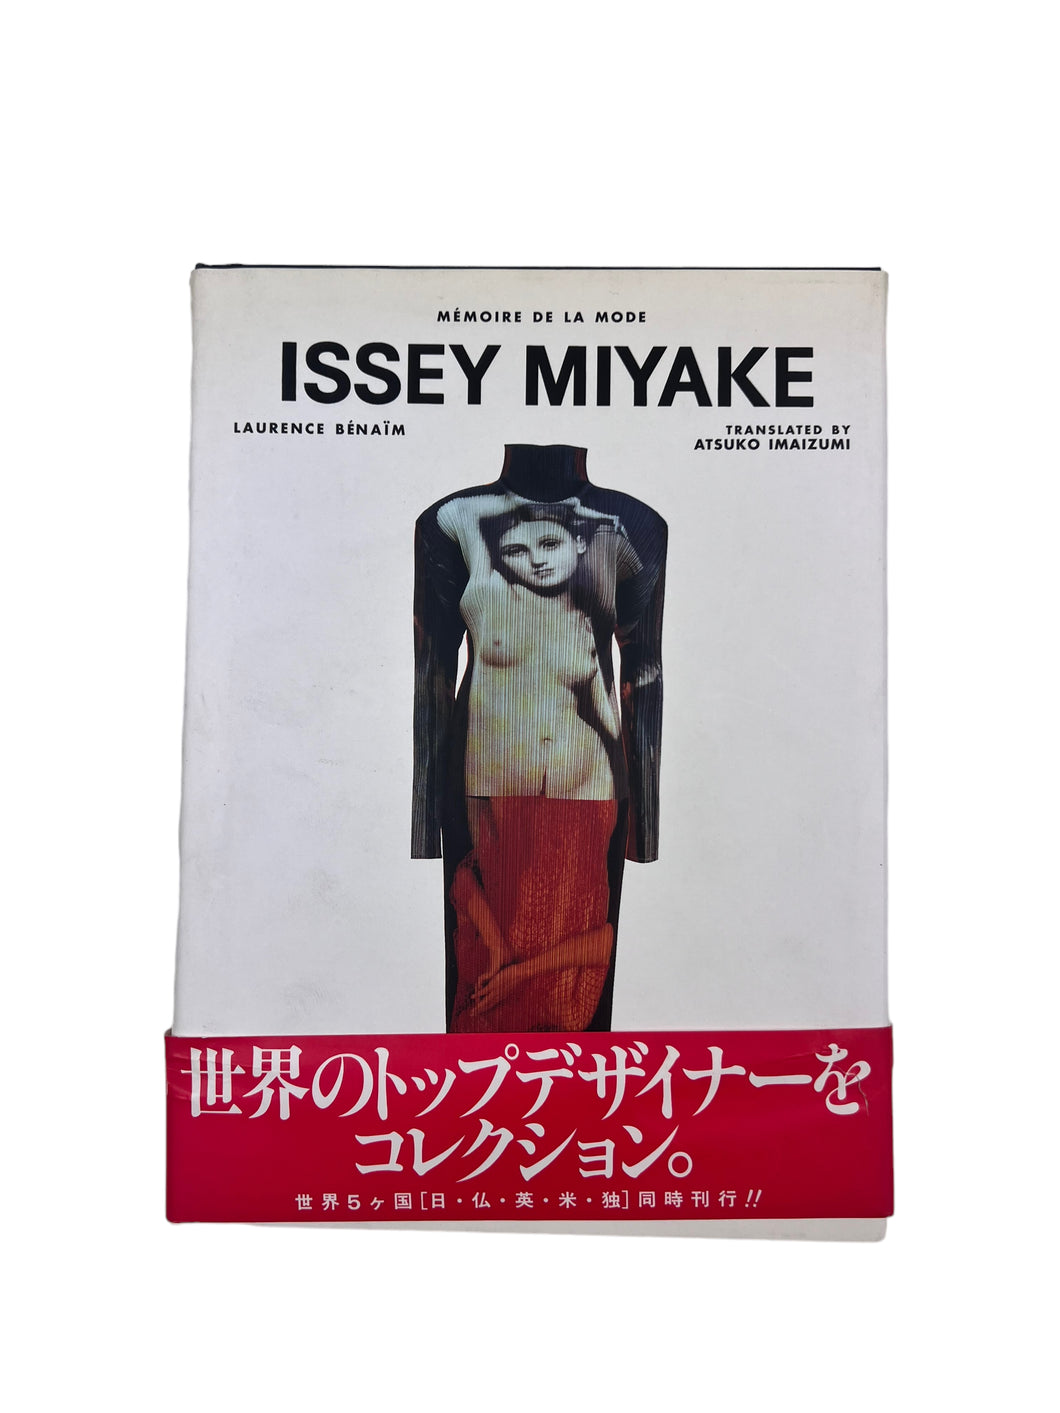 Memoire De La Mode: Issey Miyake (1997)